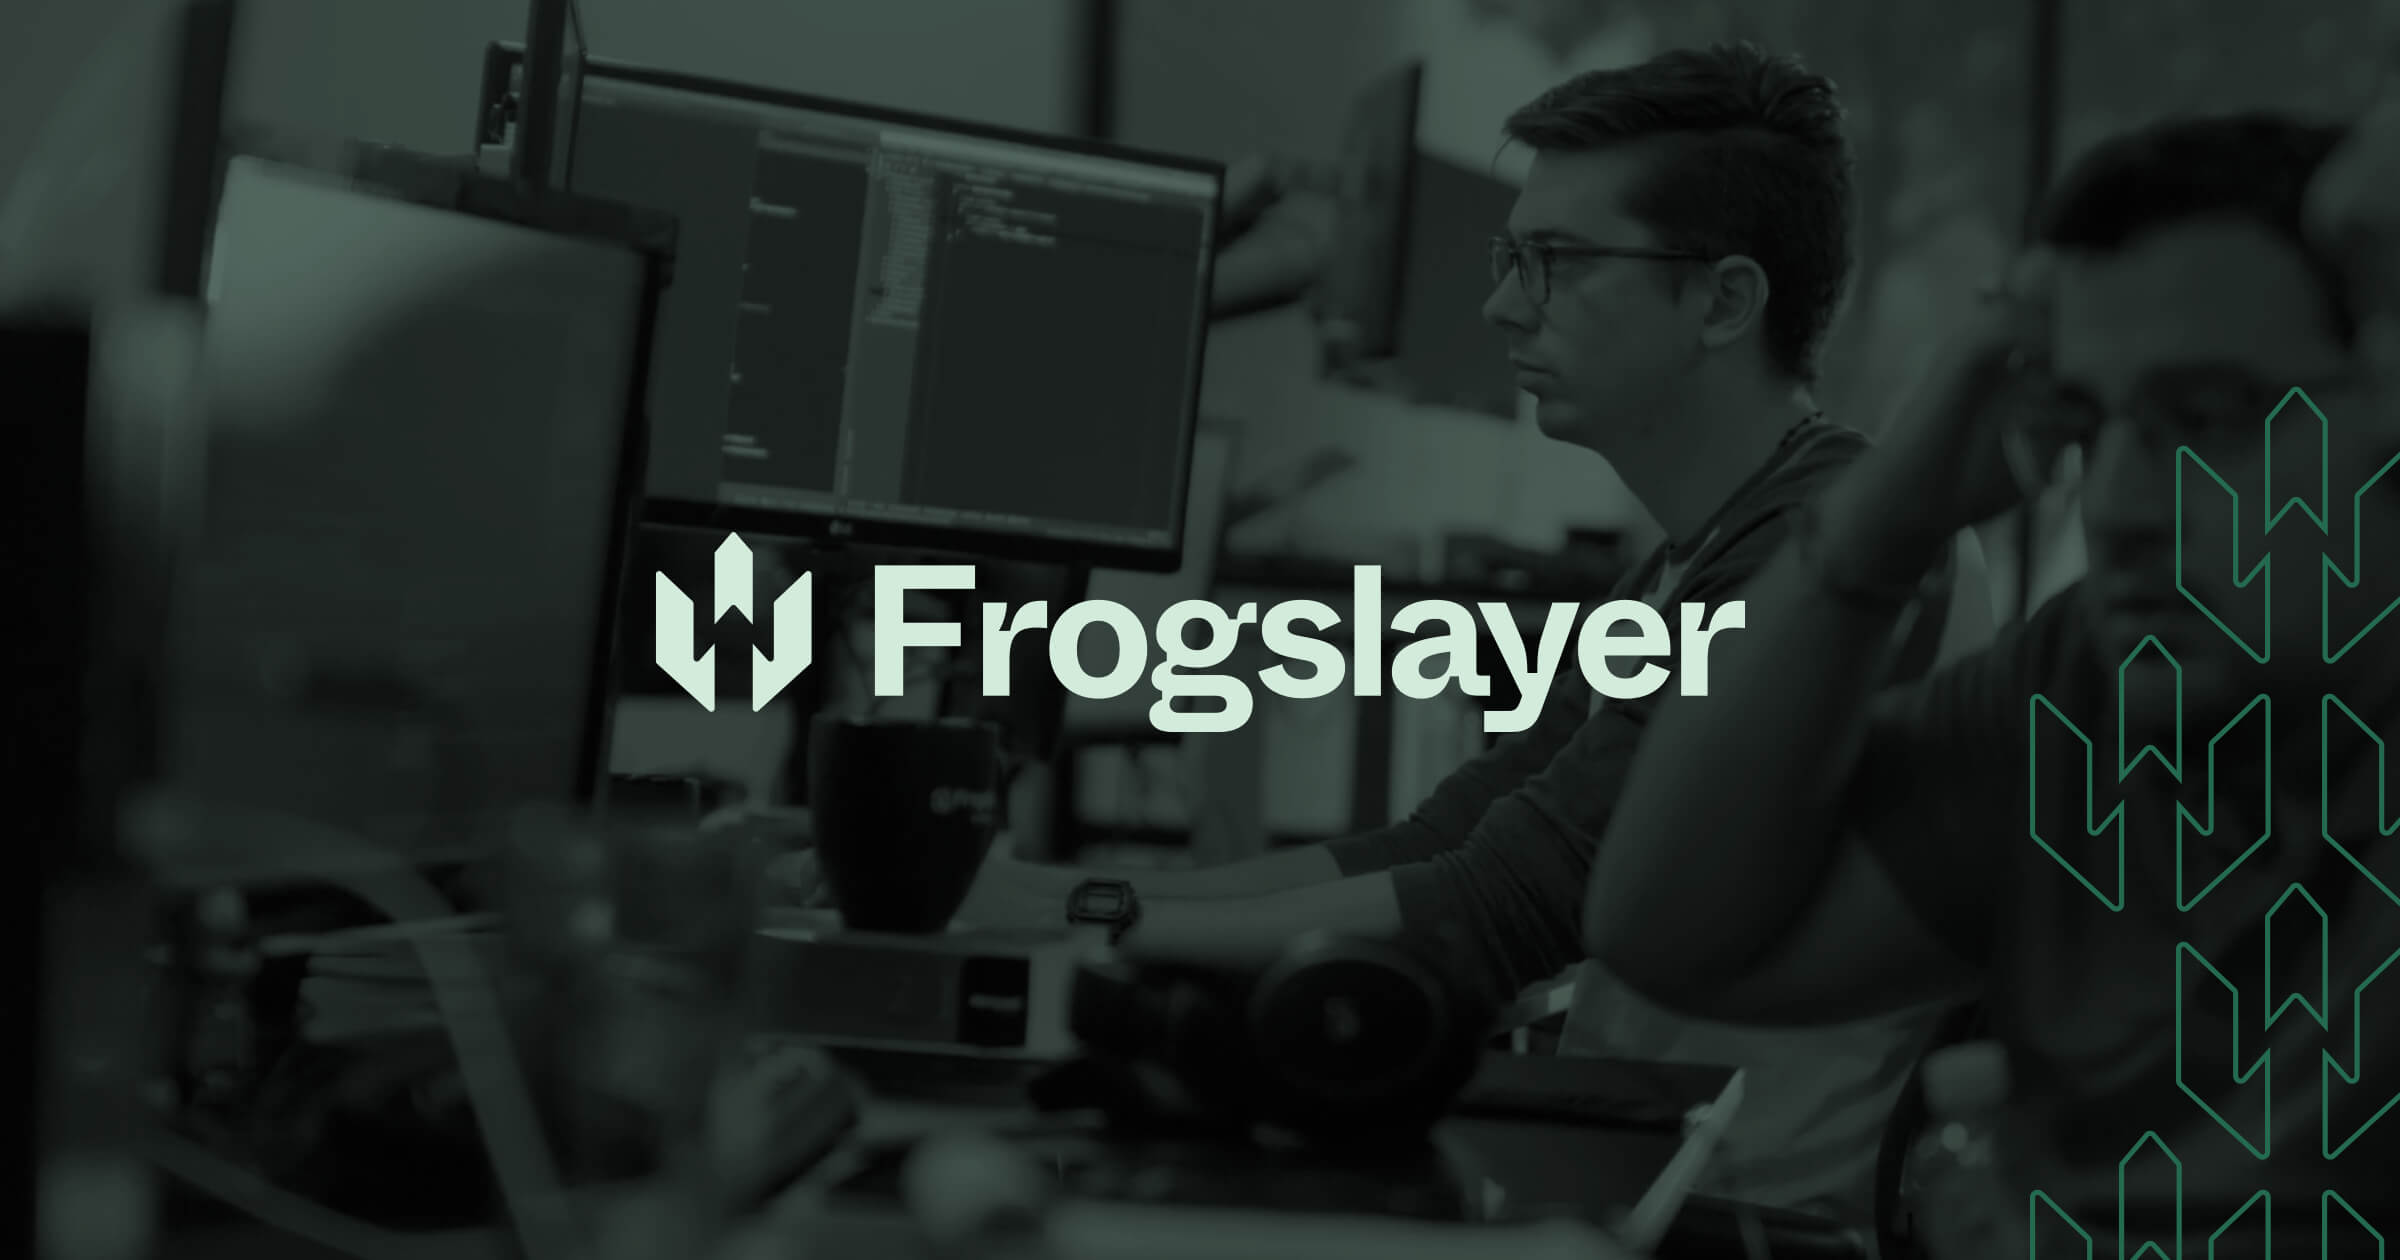 Frogslayer company